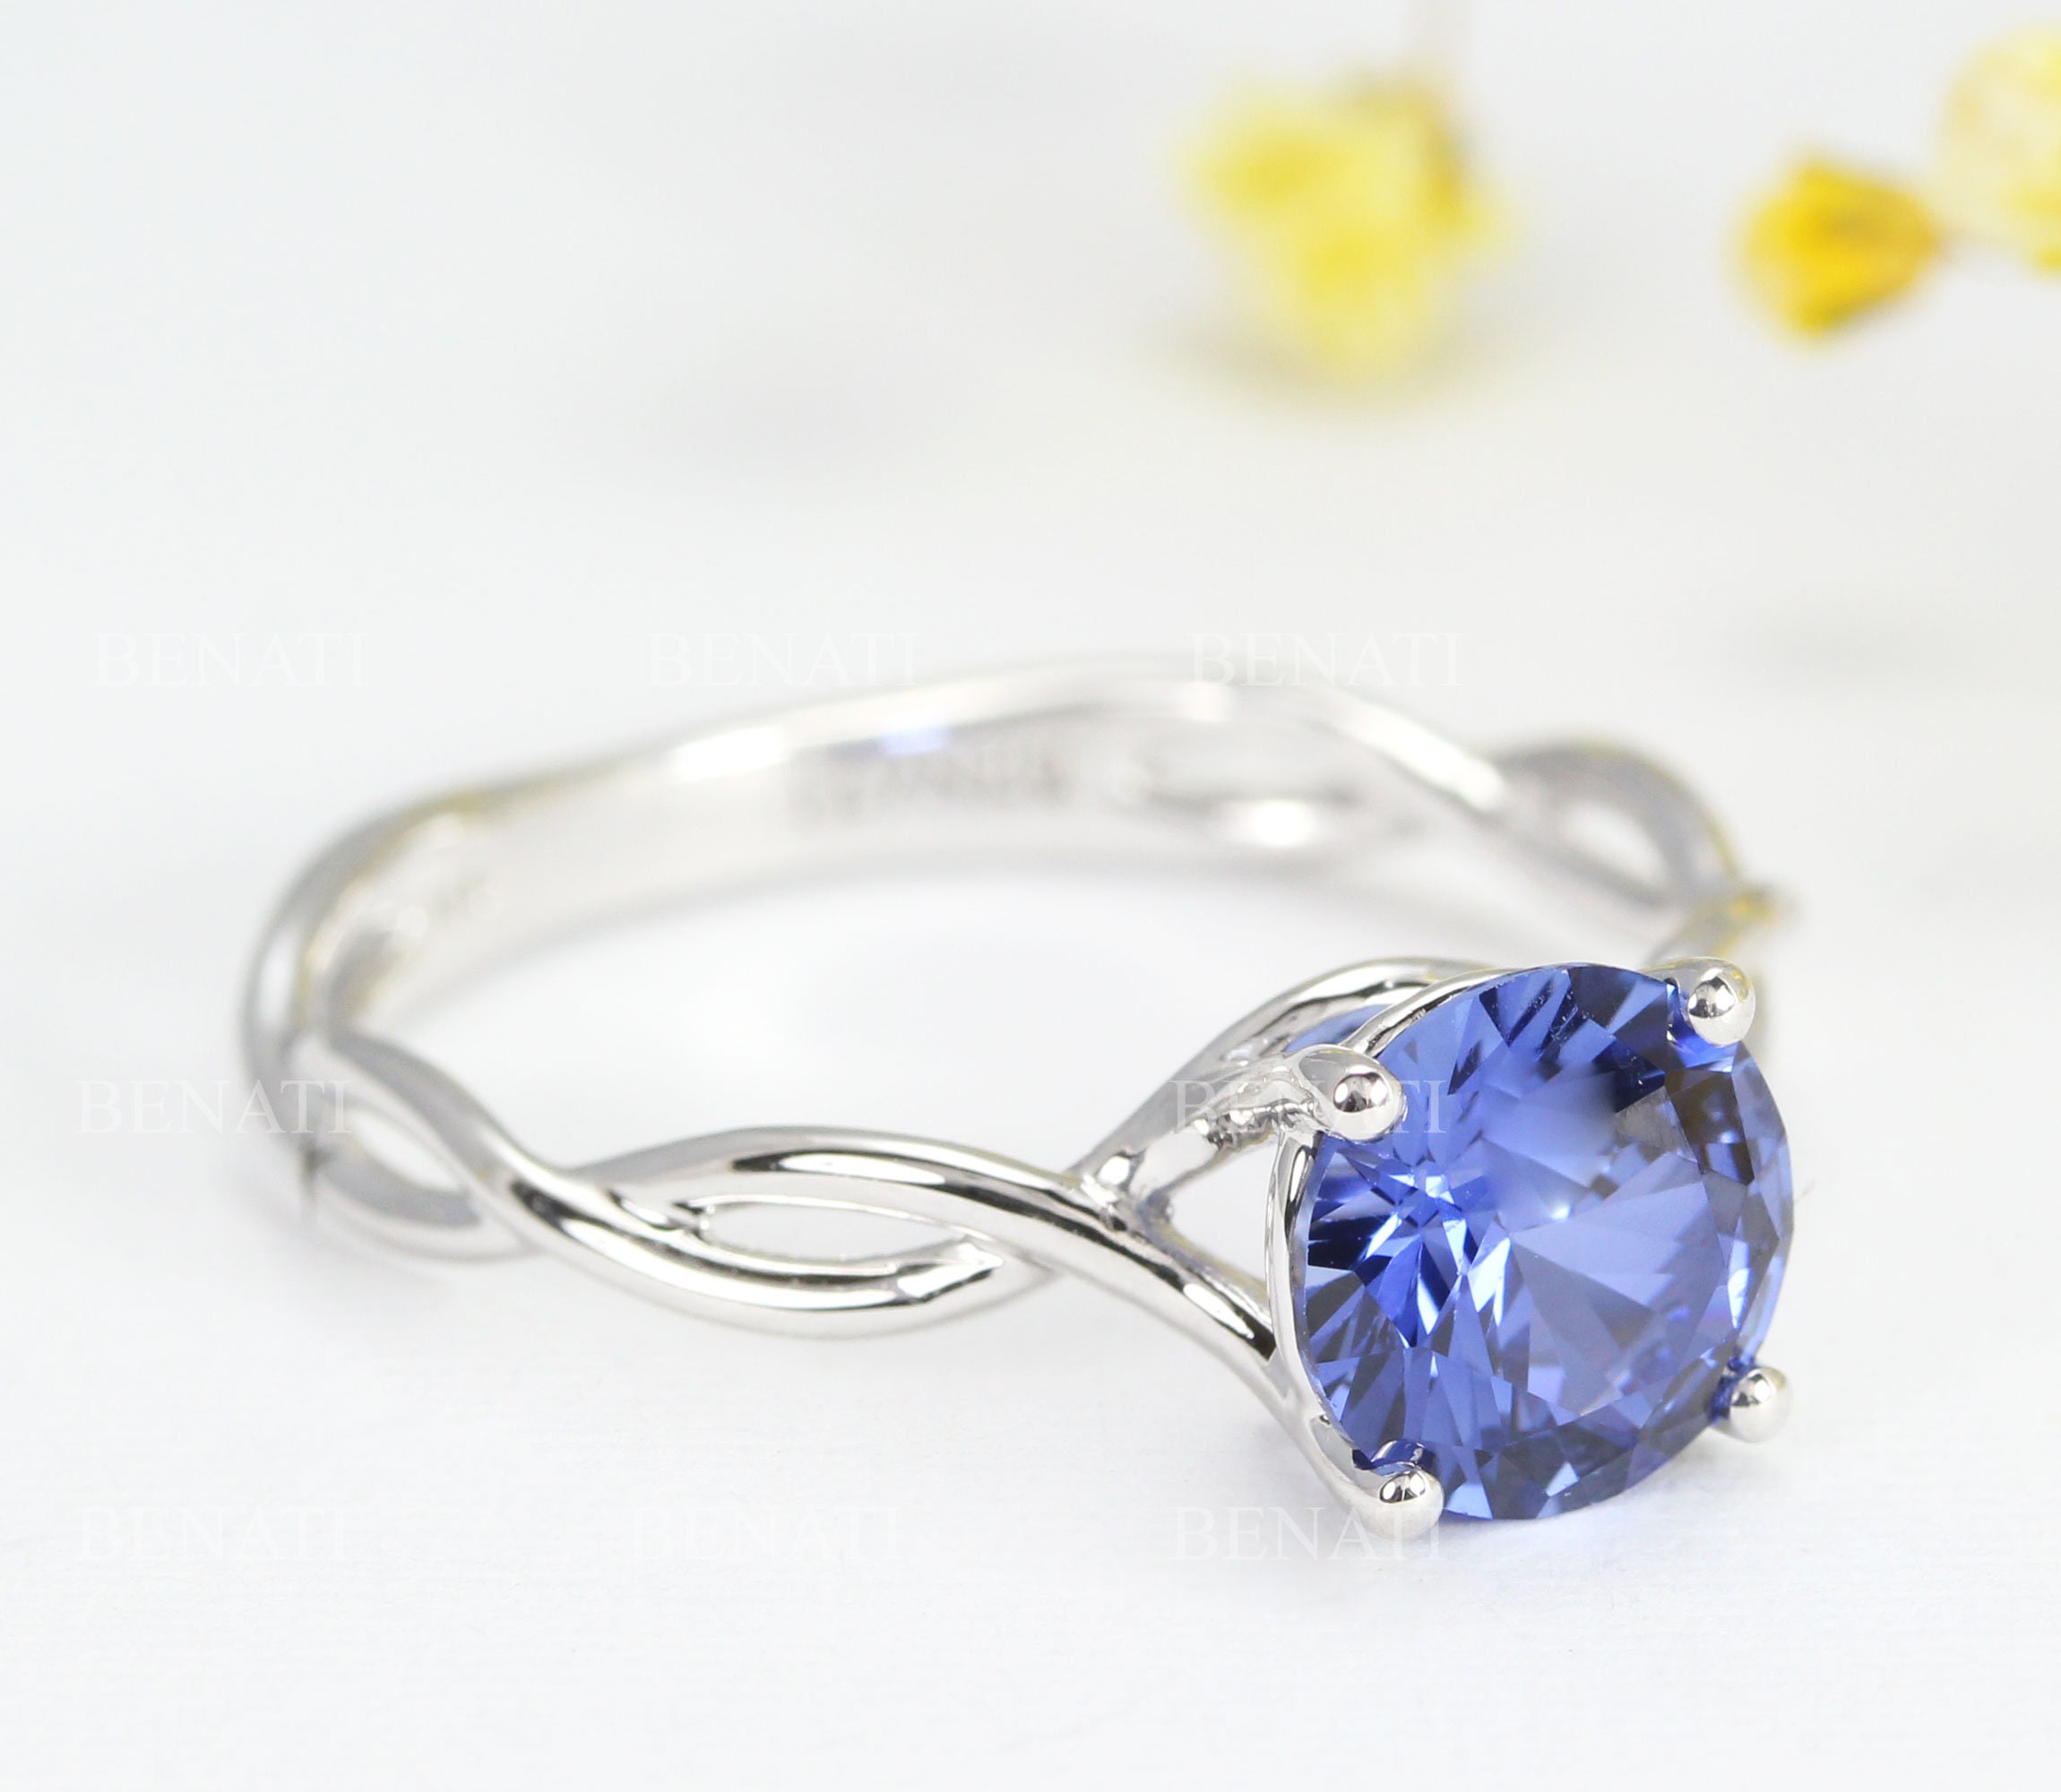 Shop Blue Sapphire Rings for Women | Angara